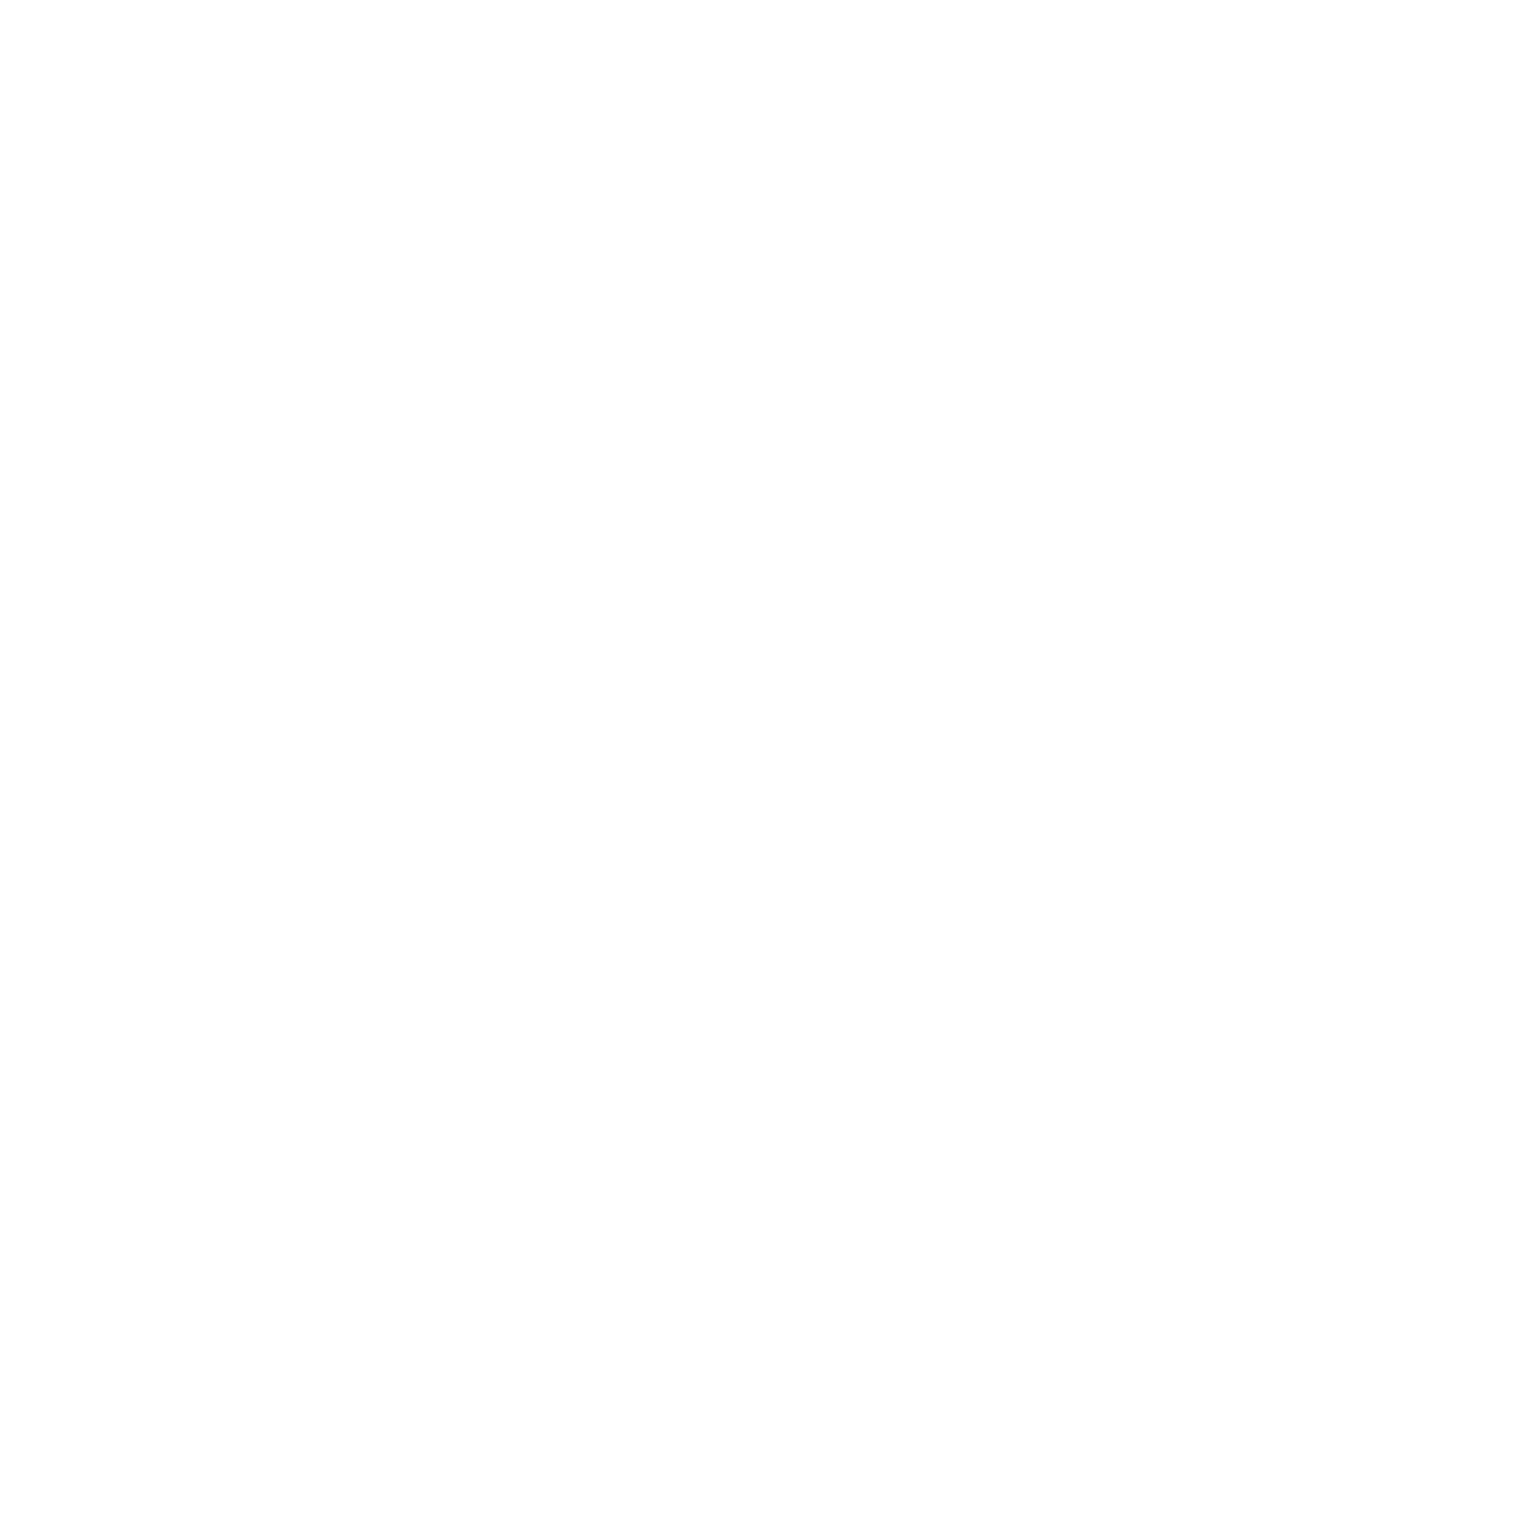 Crown and Anchor Society Logo